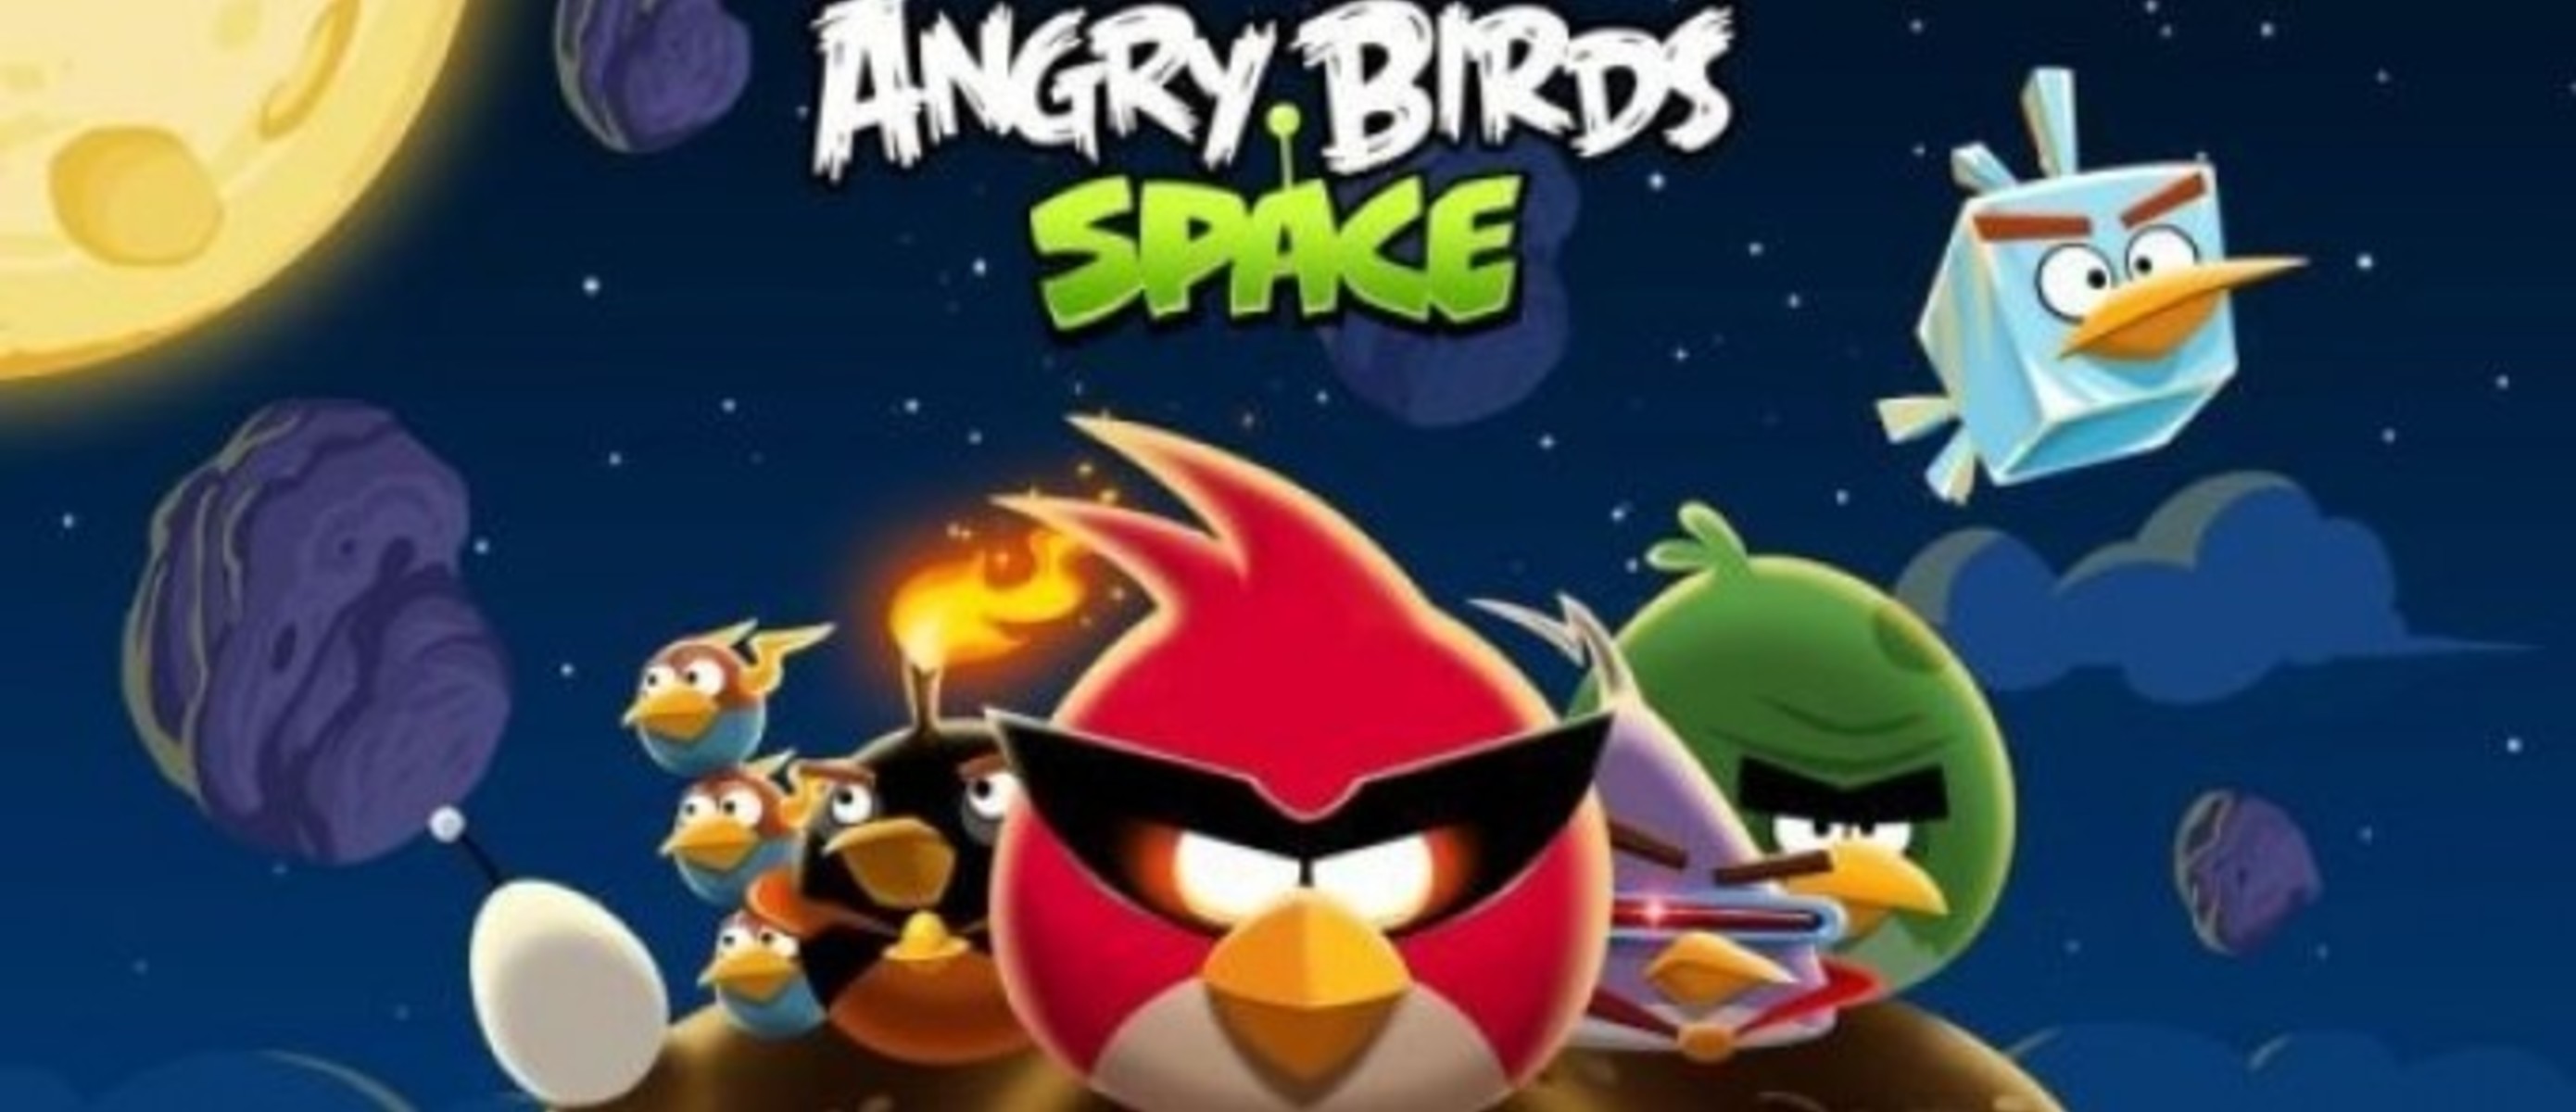 Angry birds mod. Angry Birds Space игра. Лего Angry Birds Space. Angry Birds Space птицы. Энгри бердз в космосе 2.